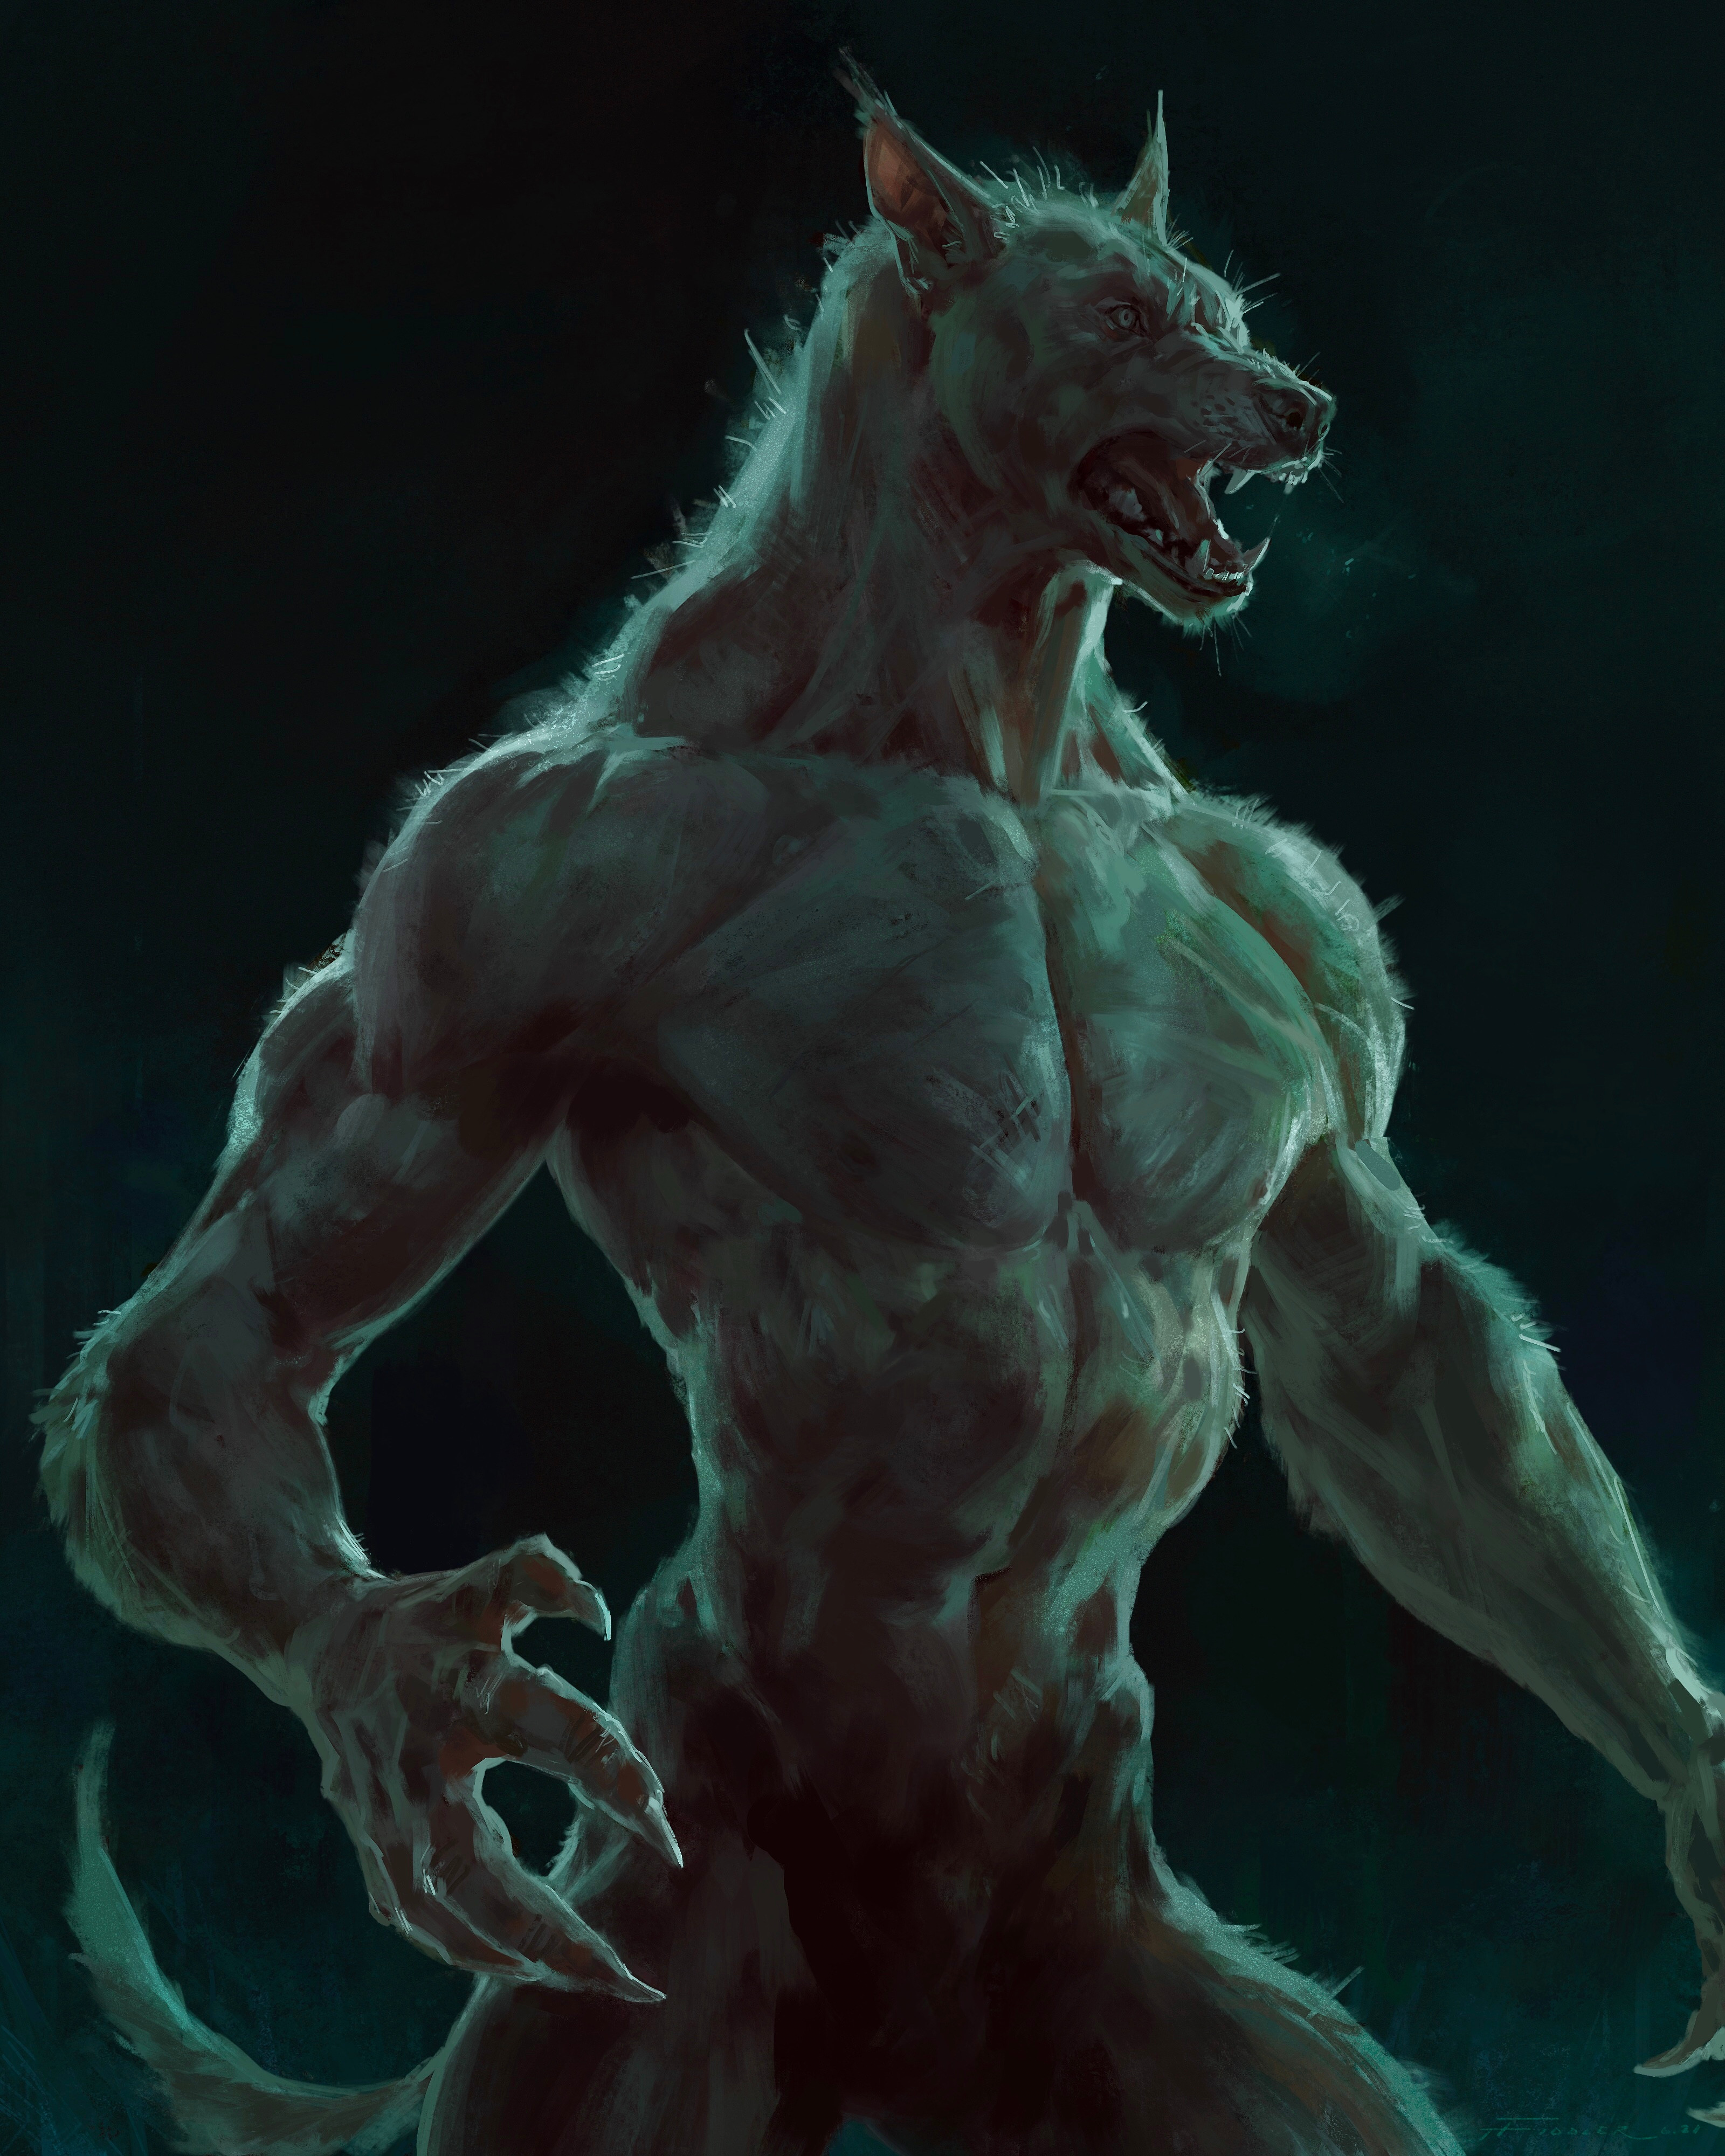 ArtStation - Night of the werewolf